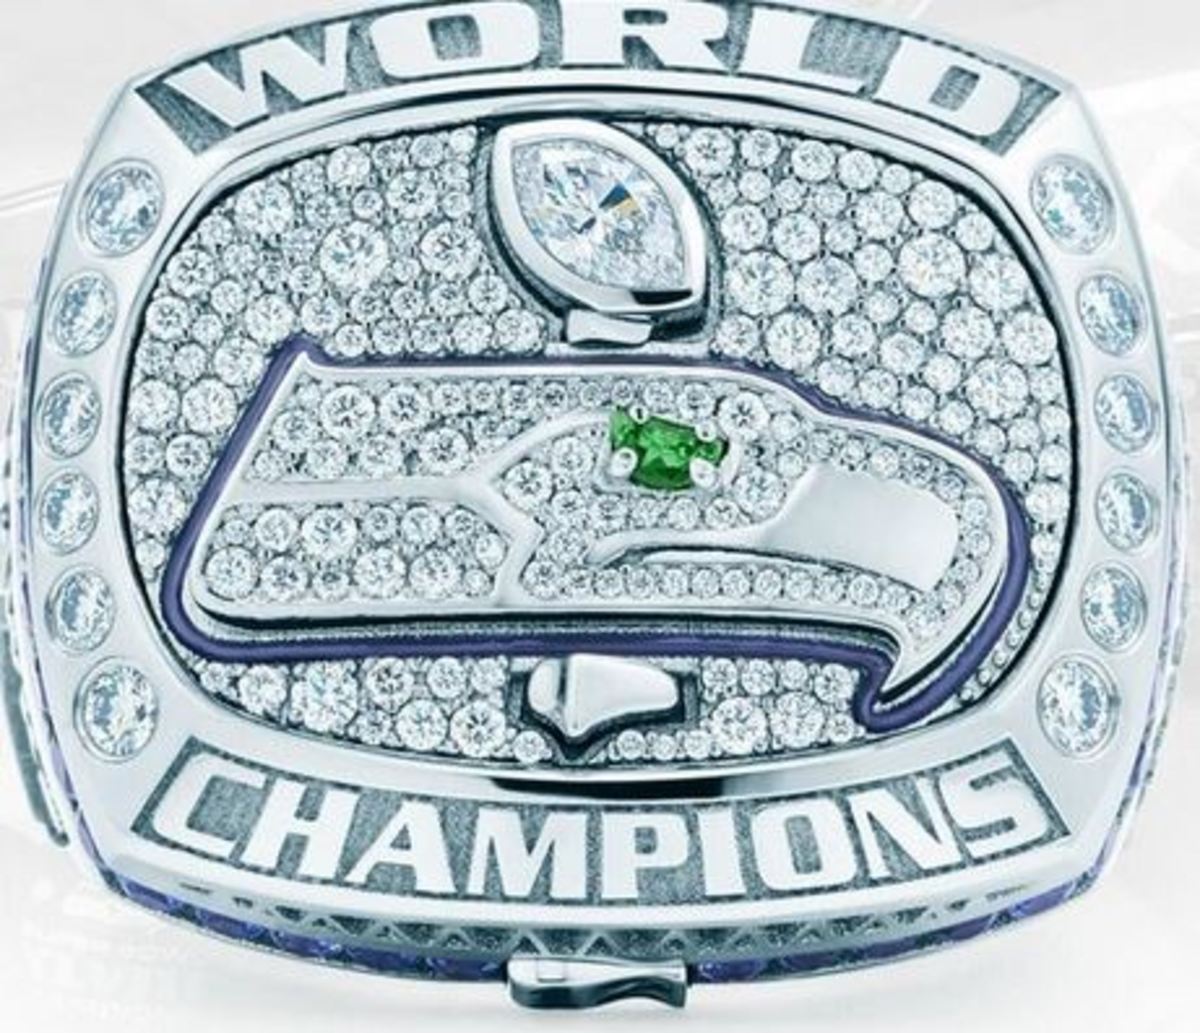  Seahawks Super Bowl XLVIII championship ring top view